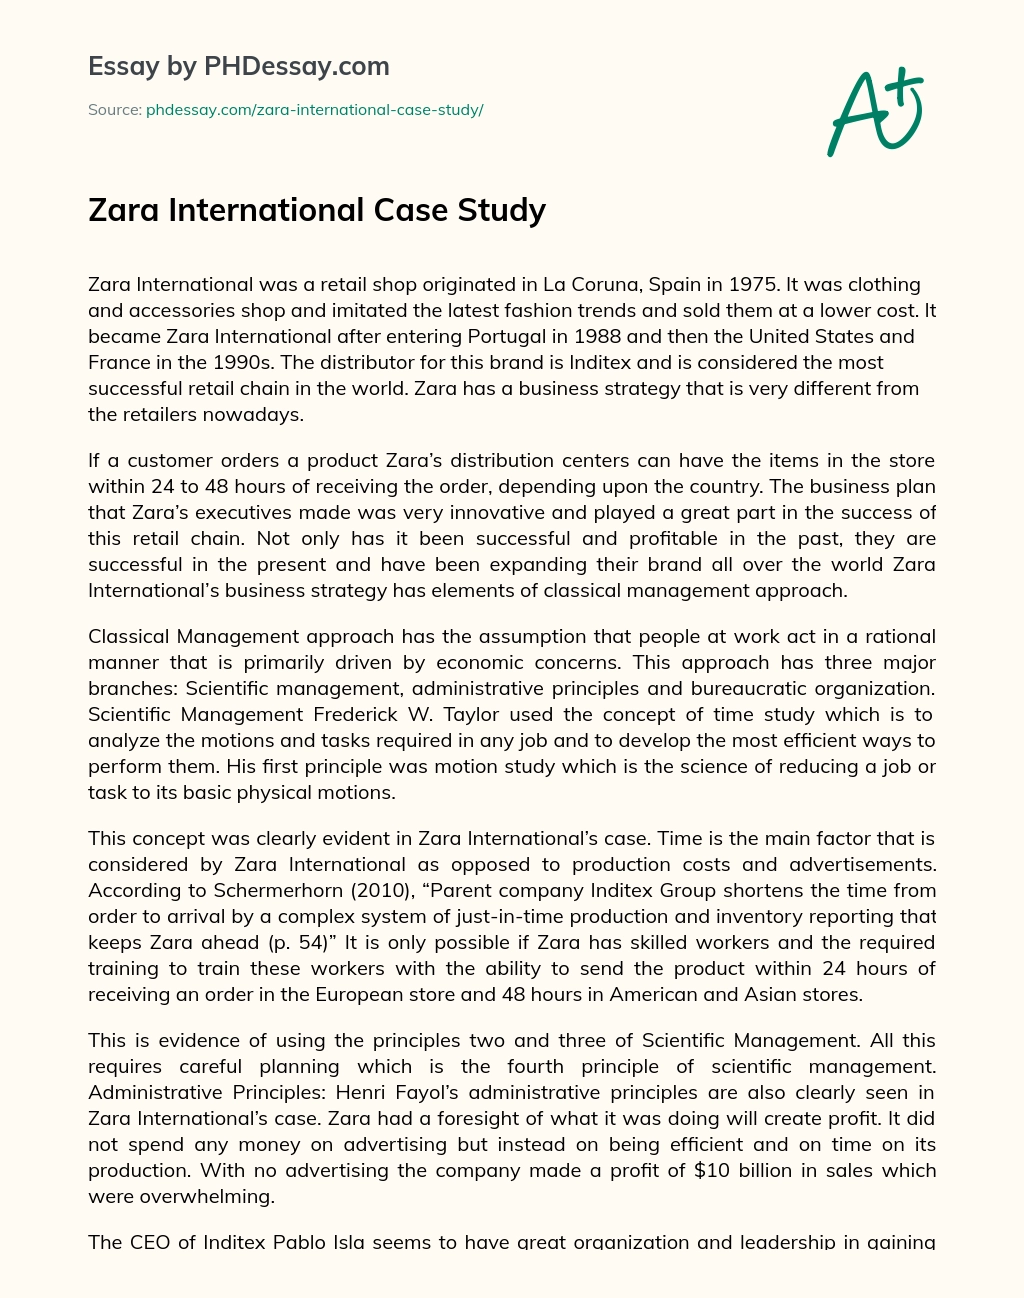 Zara International Case Study essay